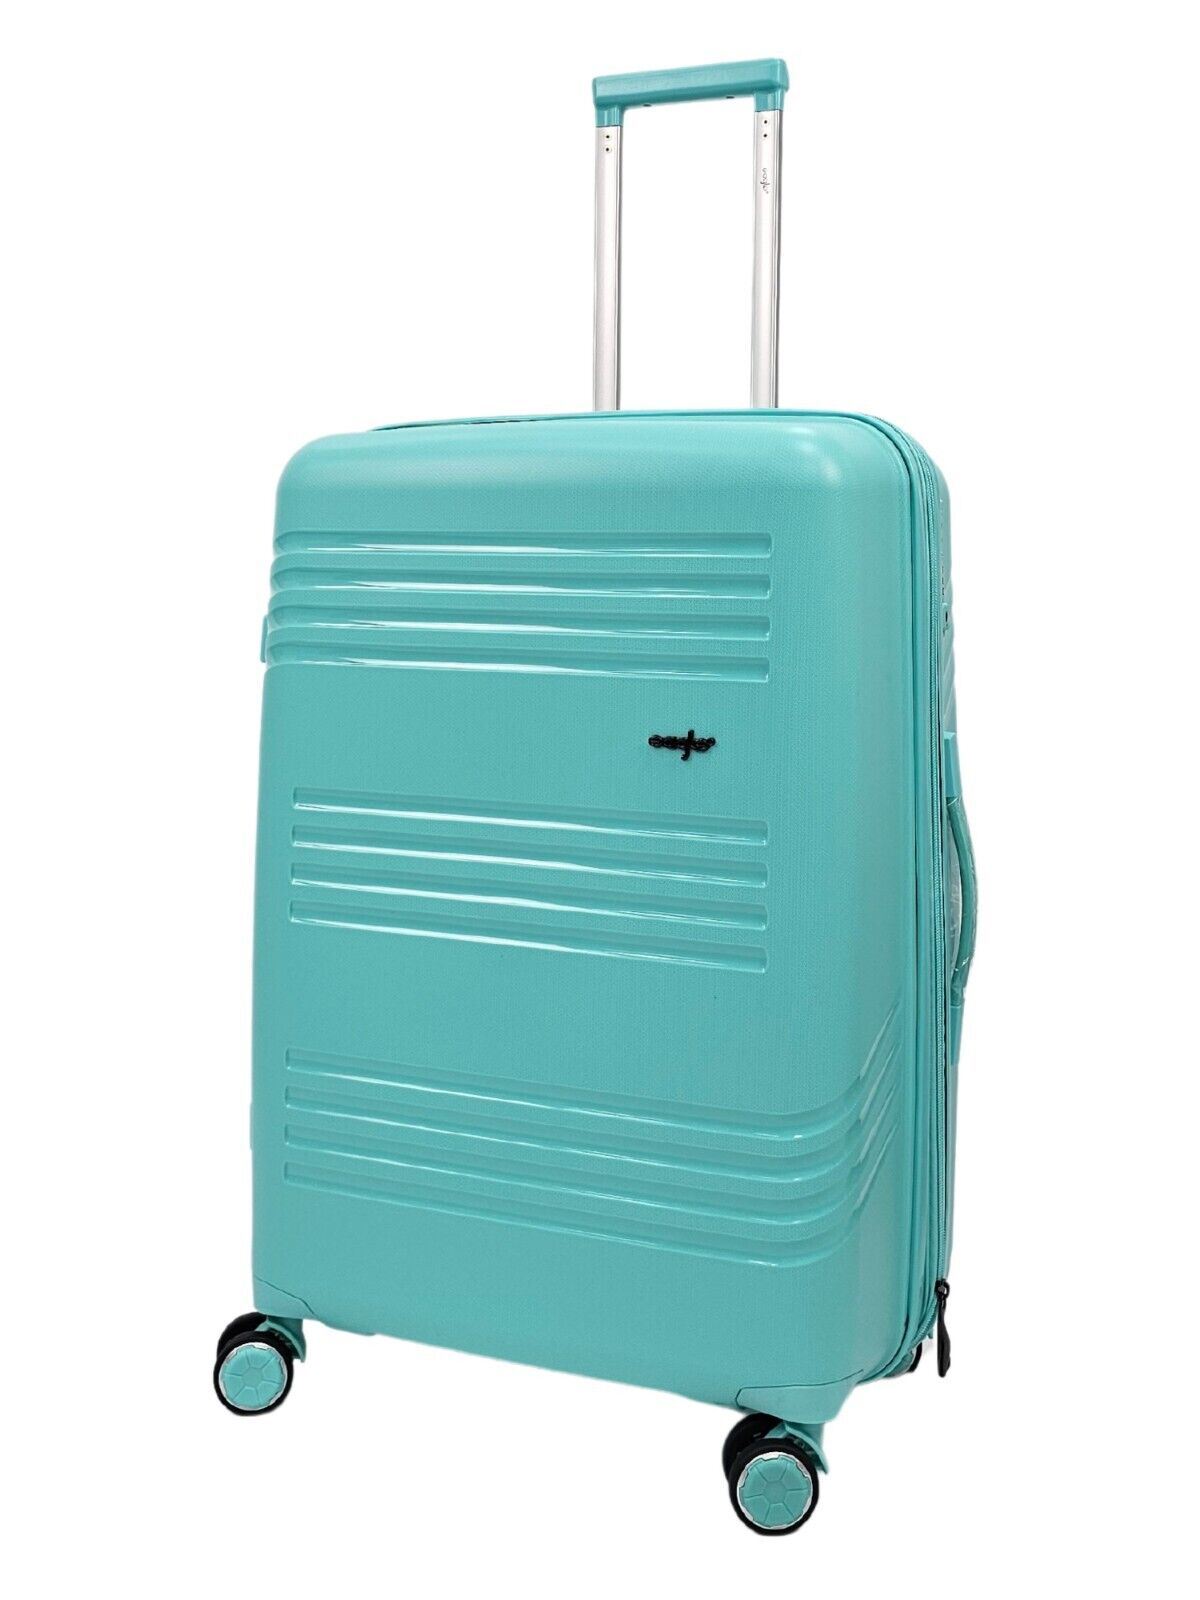 Brookwood Medium Hard Shell Suitcase in Teal